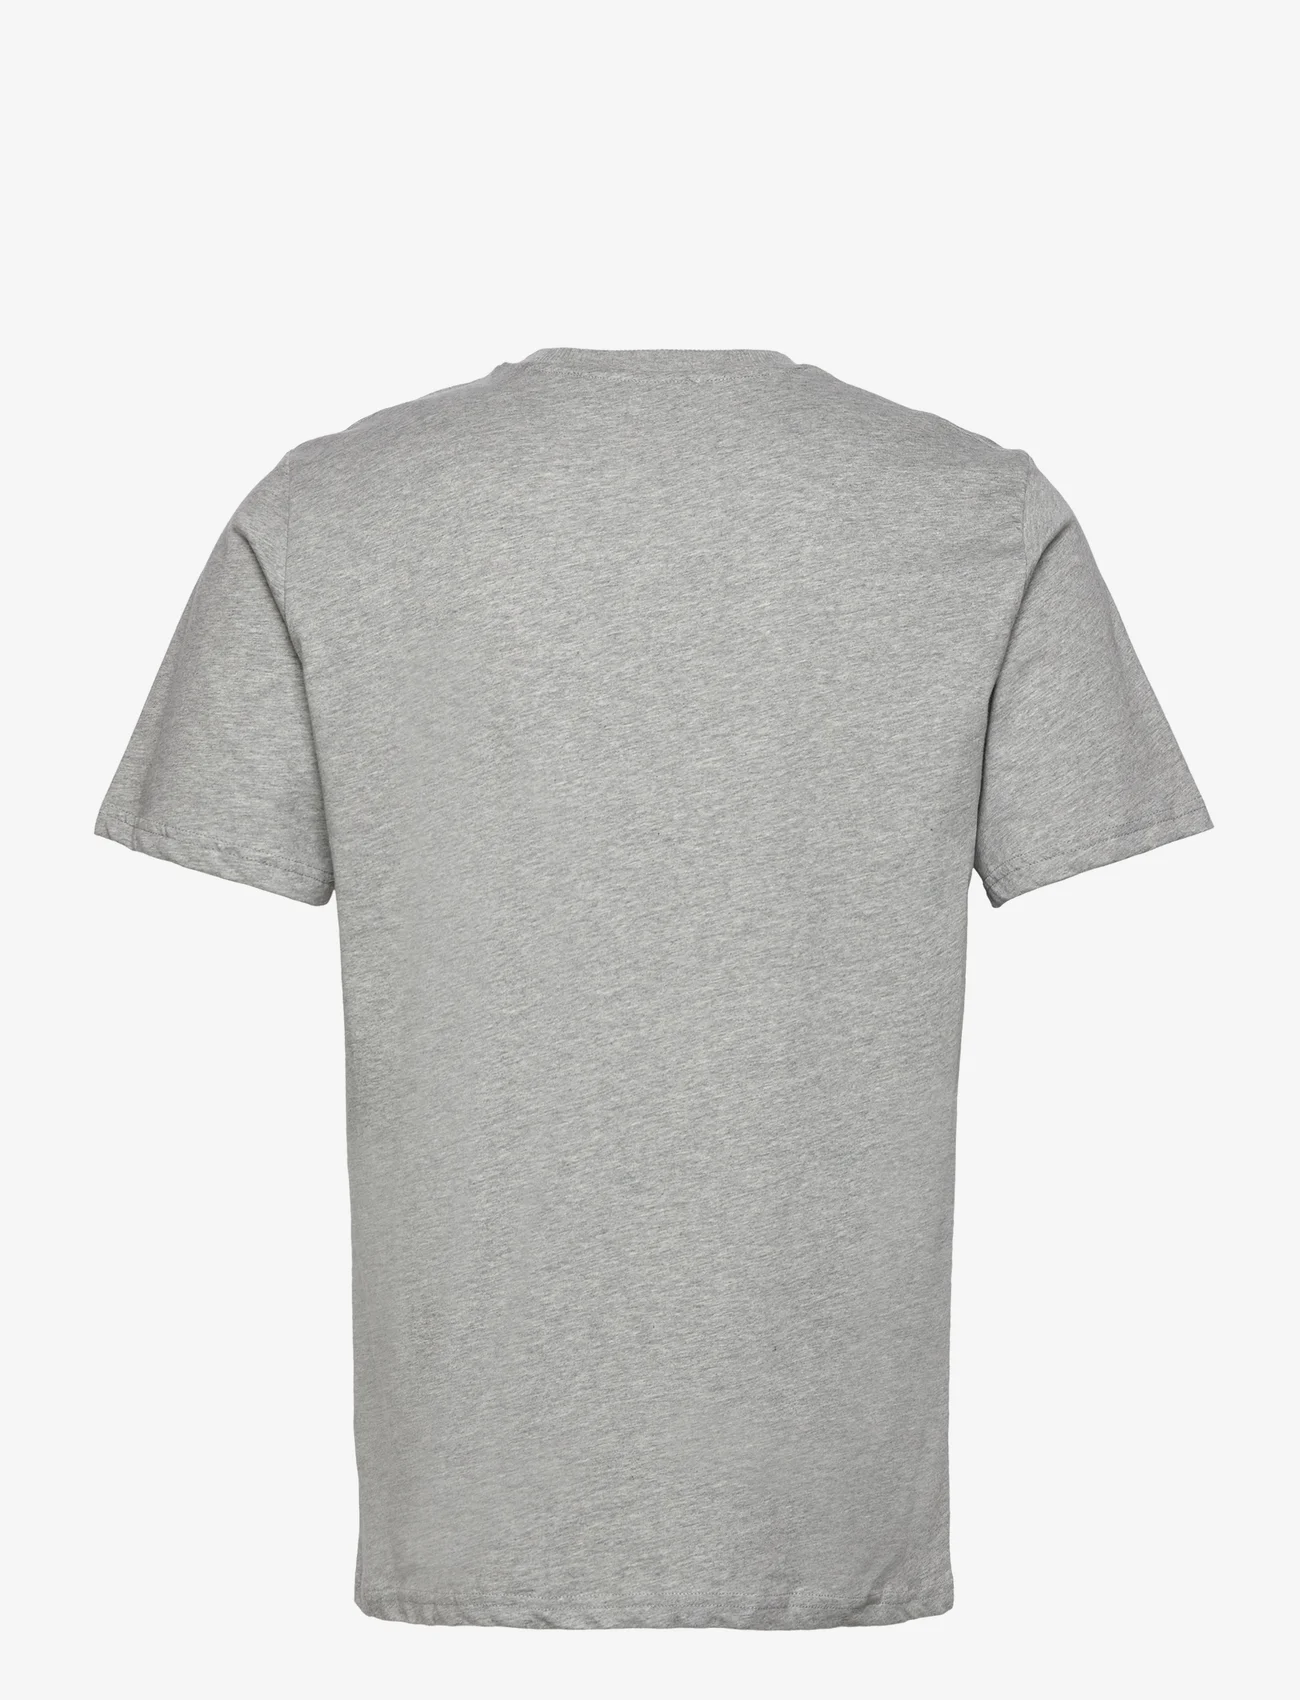 Les Deux - Blake T-Shirt - basic t-shirts - grey mélange/white - 1